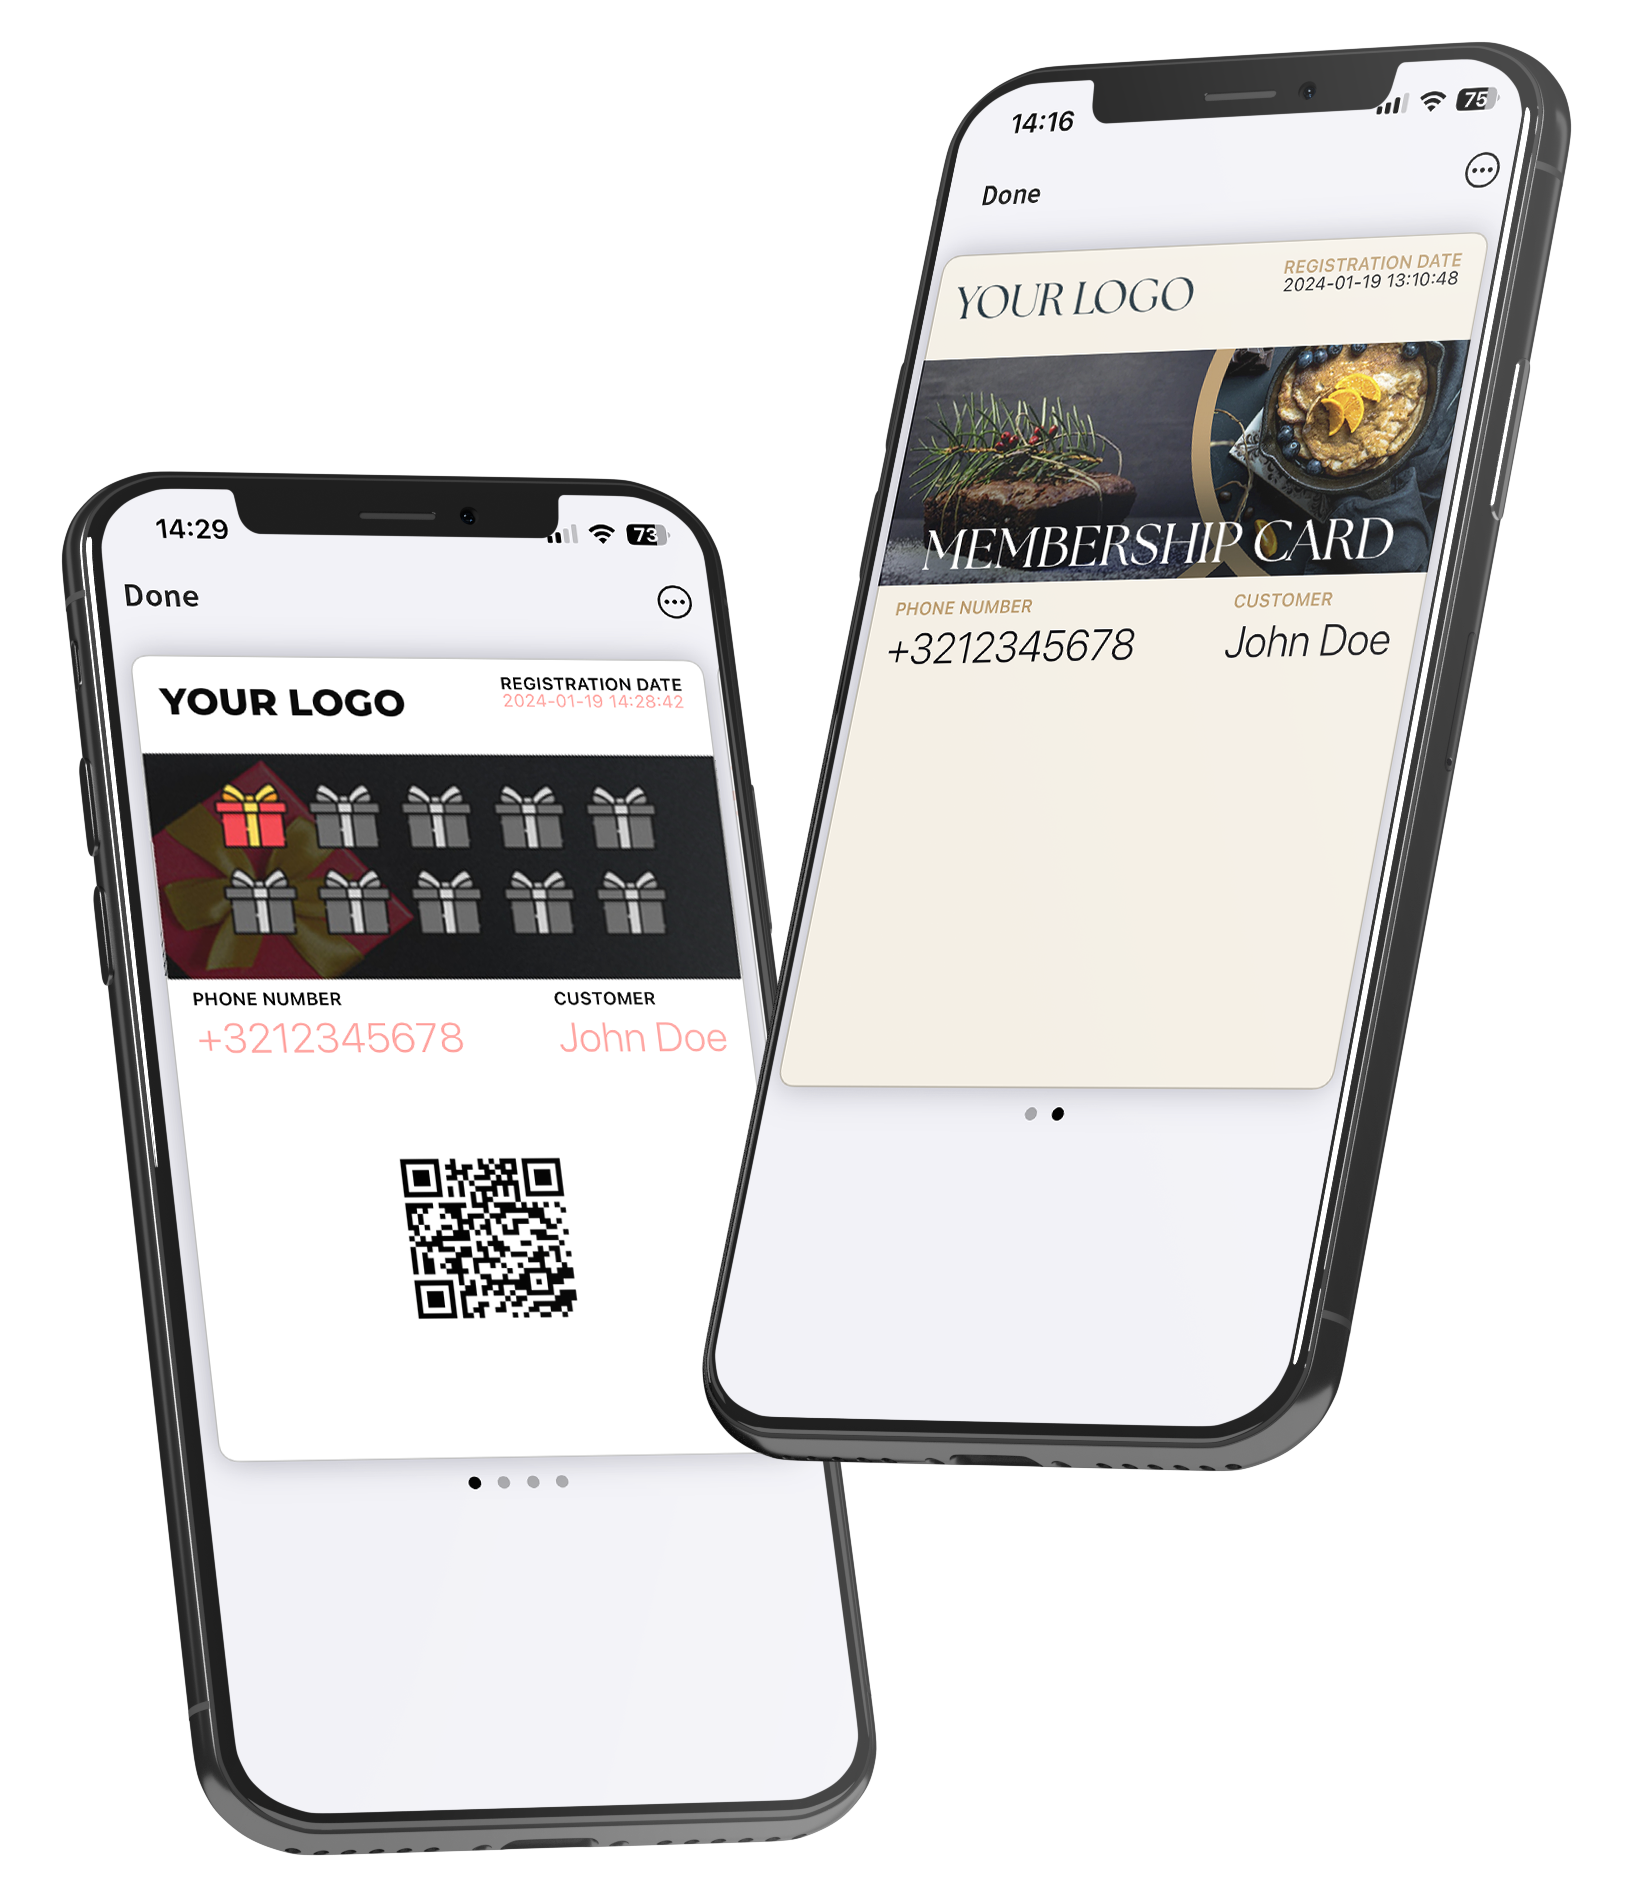 Digital Stamp Loyalty Card on a smartphone.